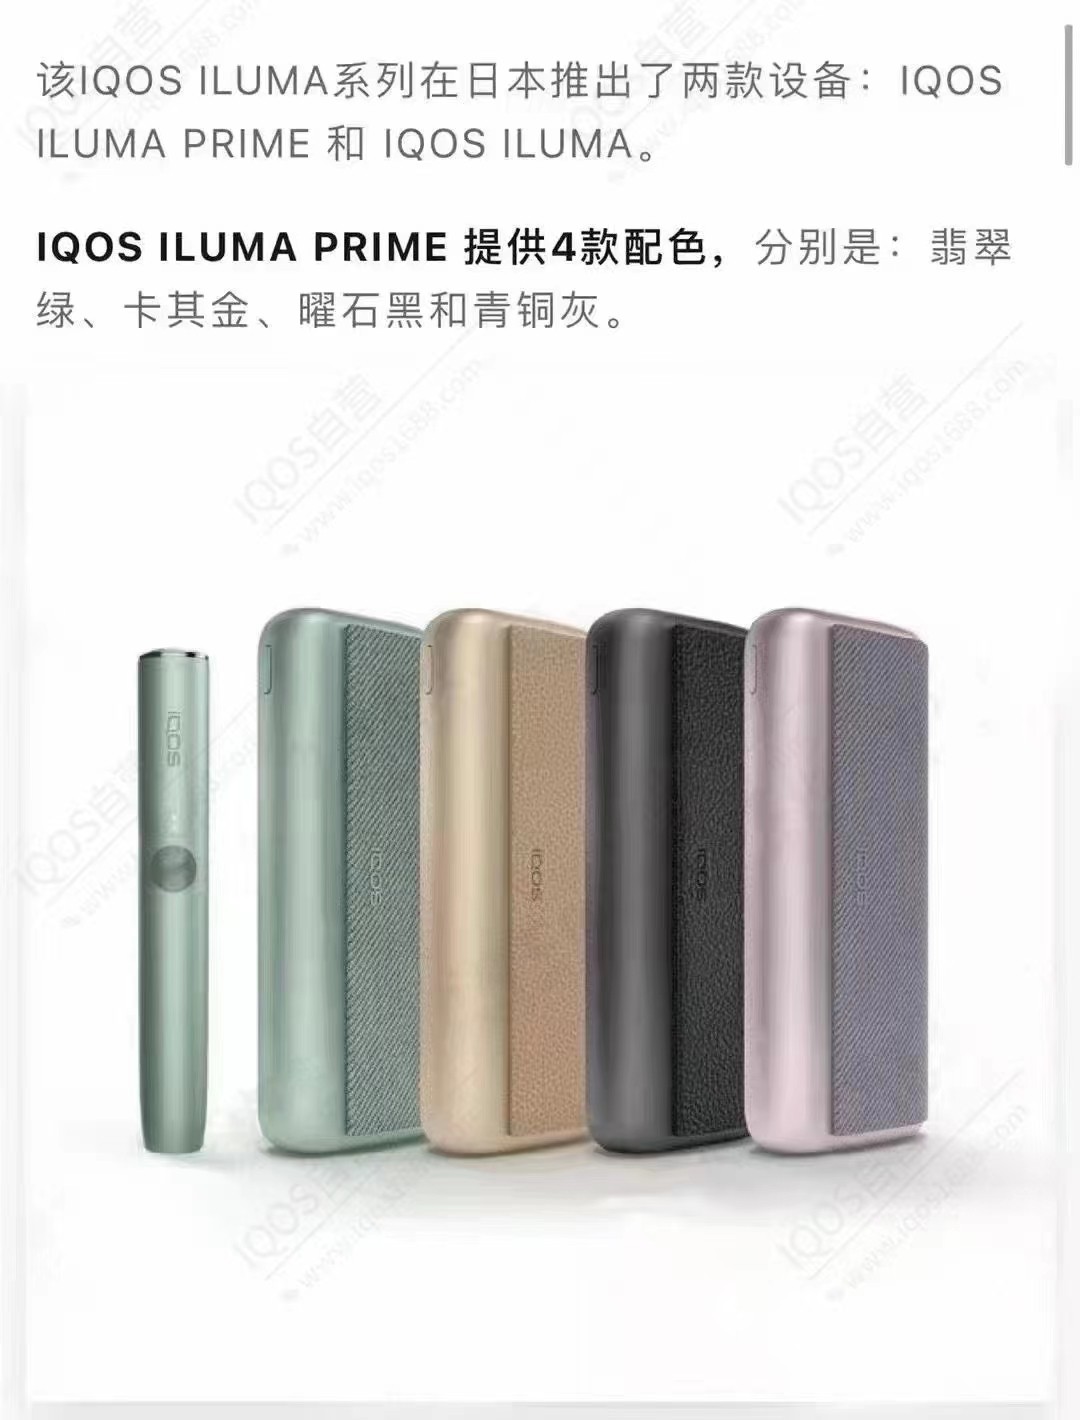 IQOS ILUMA PRIME 新品上市旗舰版青铜色款_IQOS专营店-IQOS电子烟-IQOS 